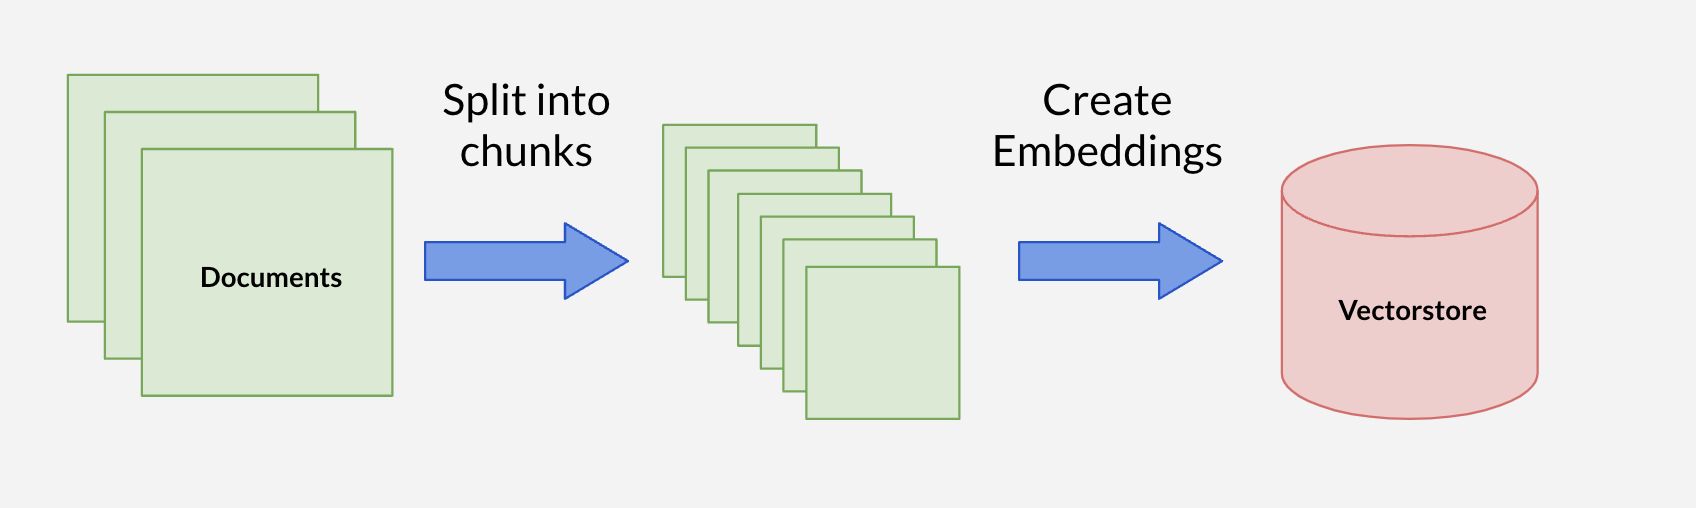 Create Embeddings